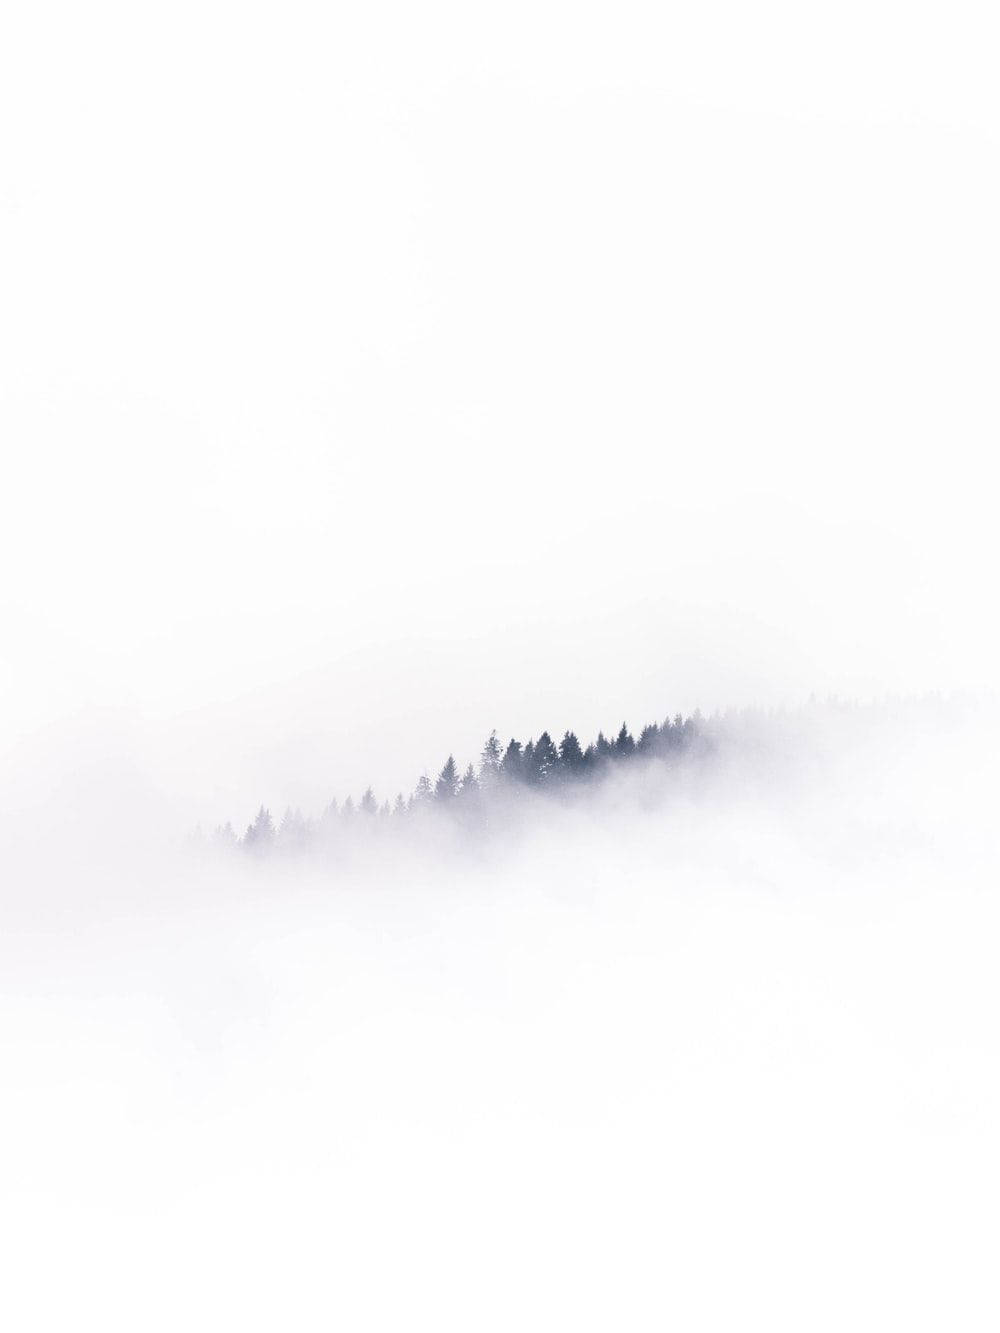 Grayscale Mountain Range For White Screen